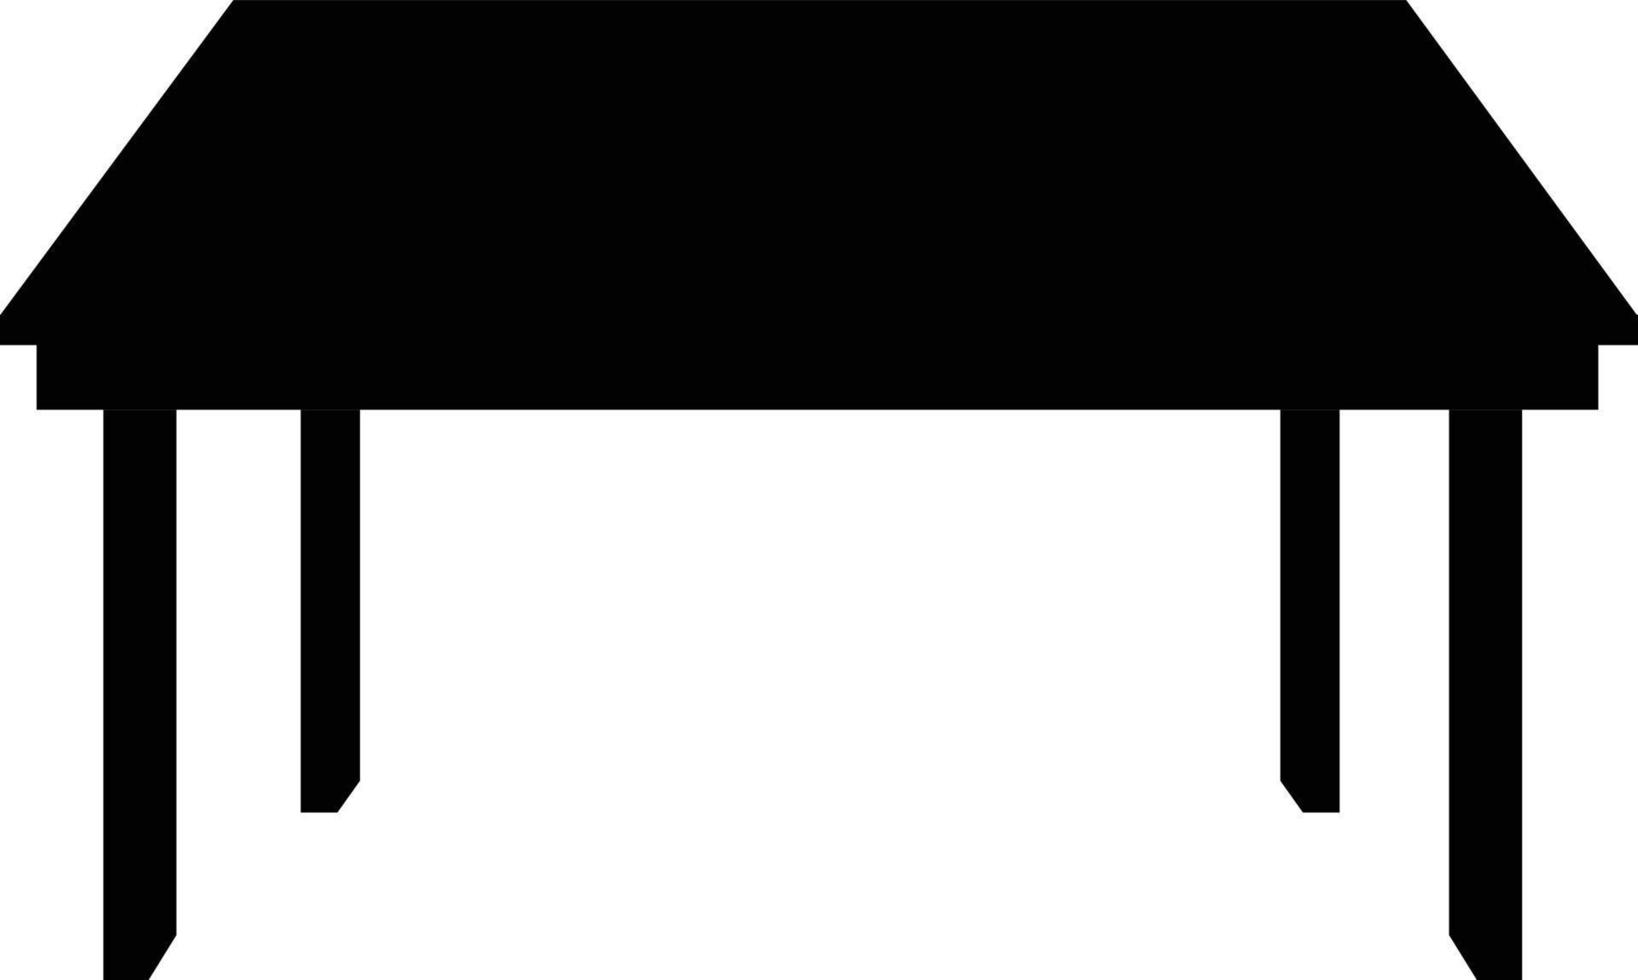 icono de mesa negra sobre fondo blanco. cartel de mesa de madera negra.  símbolo de la mesa de madera. estilo plano 10311128 Vector en Vecteezy